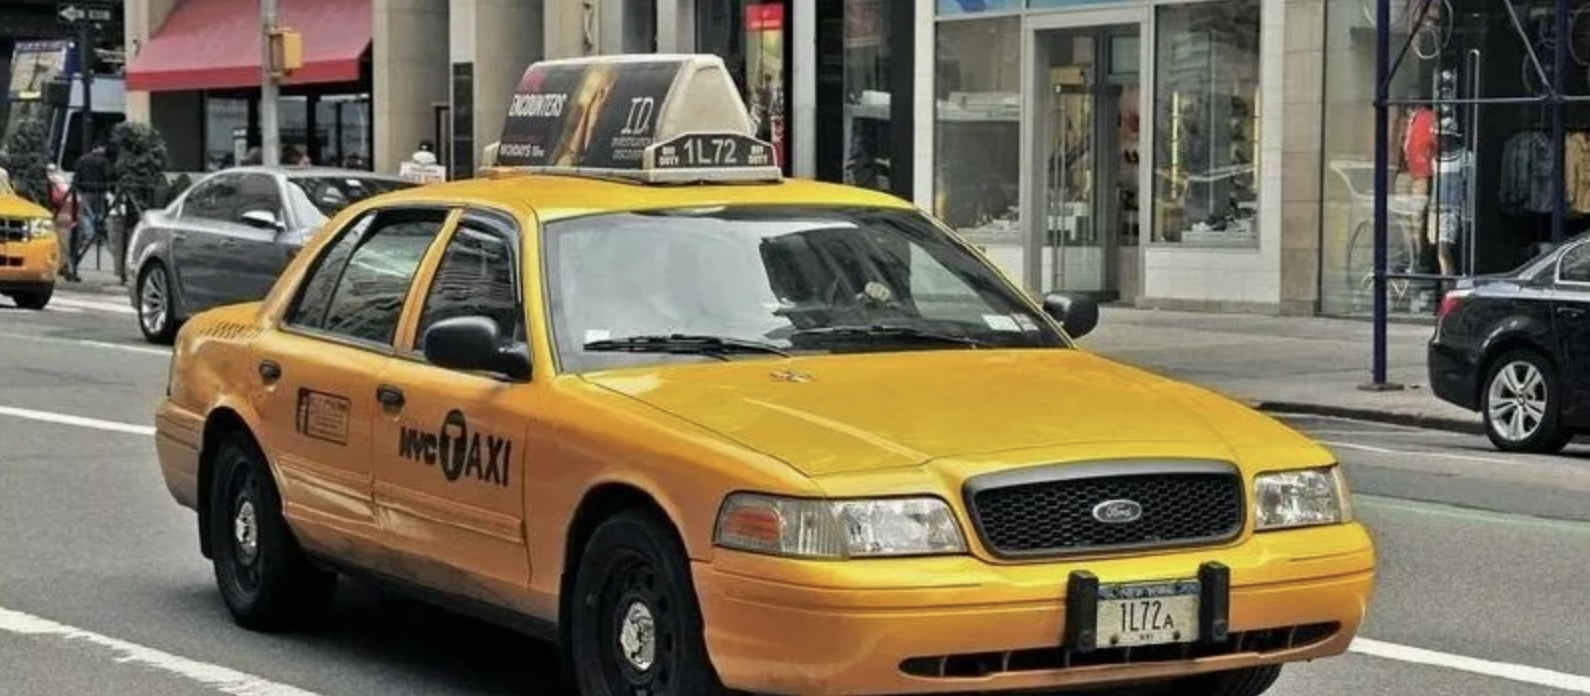 A taxi | Source: Shutterstock